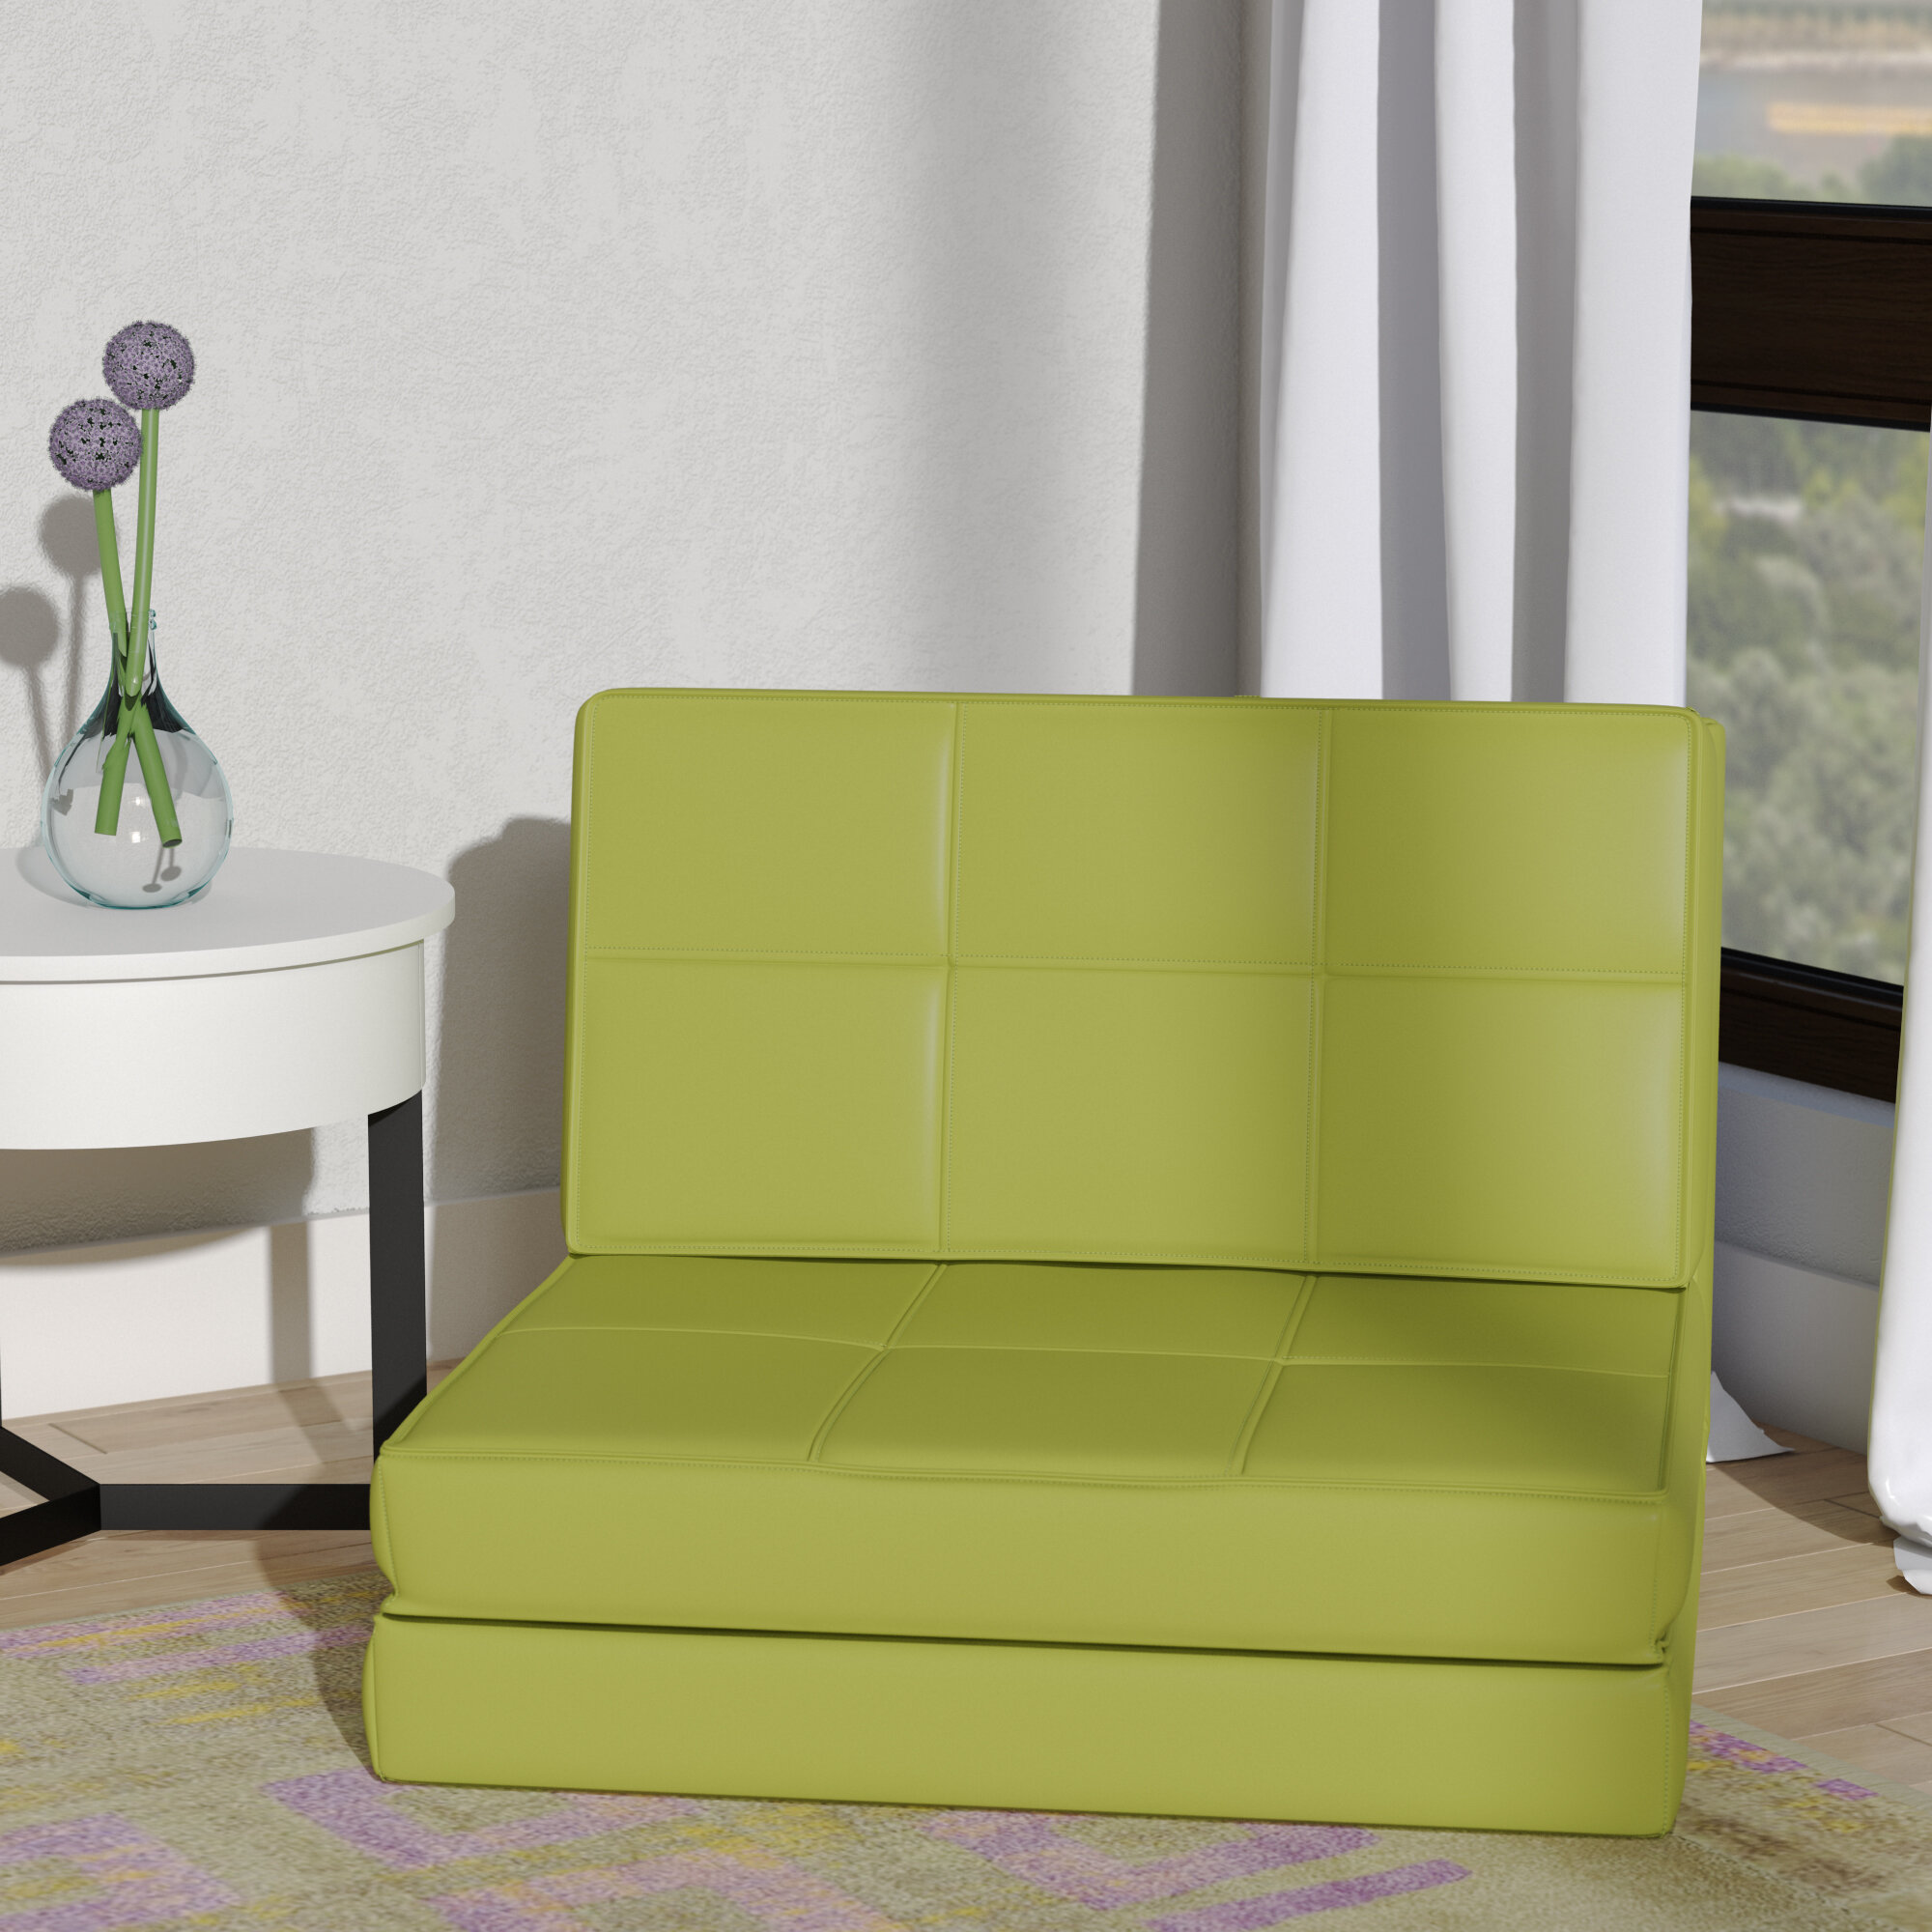 Wrought Studio Onderdonk 29 1 Convertible Chair Reviews Wayfair